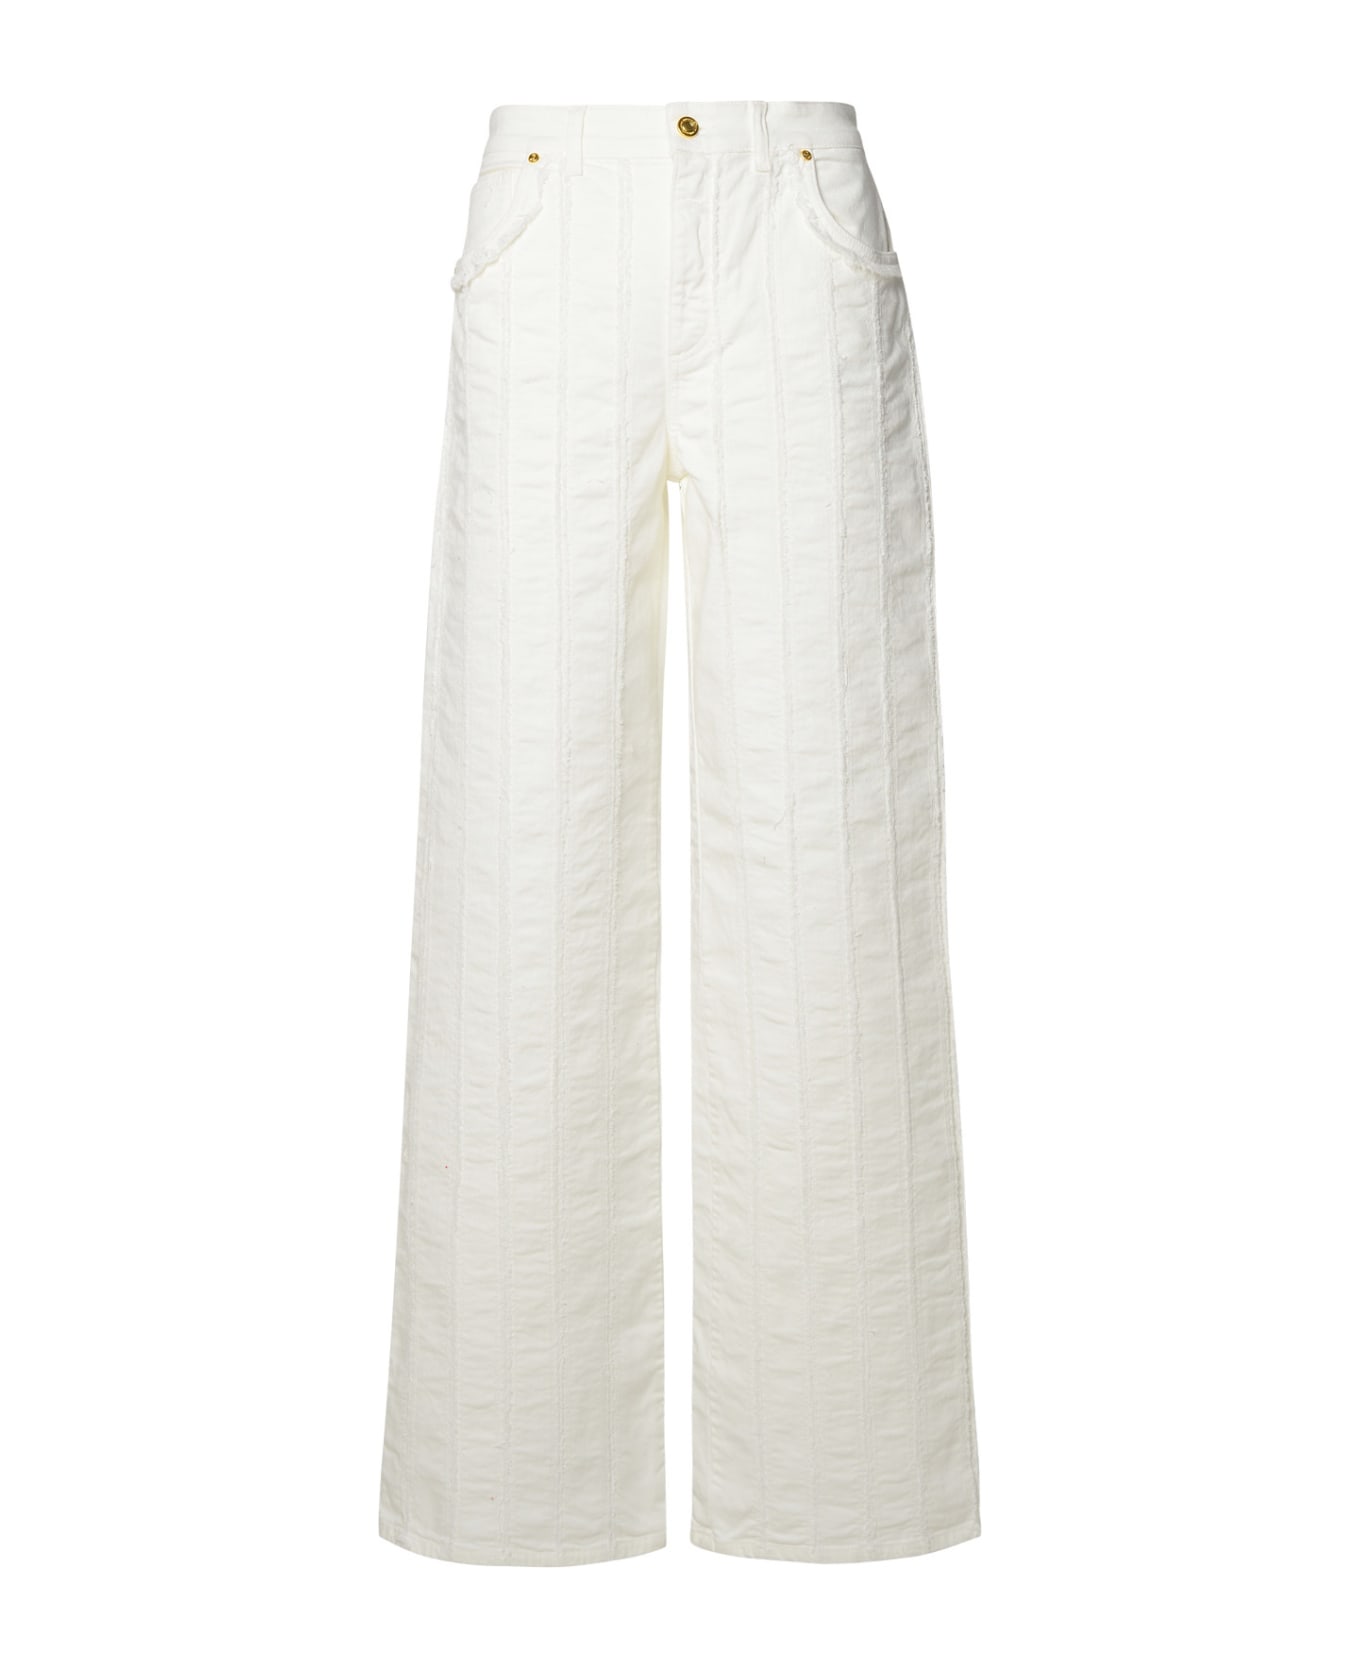 Blumarine White Cotton Jeans - White